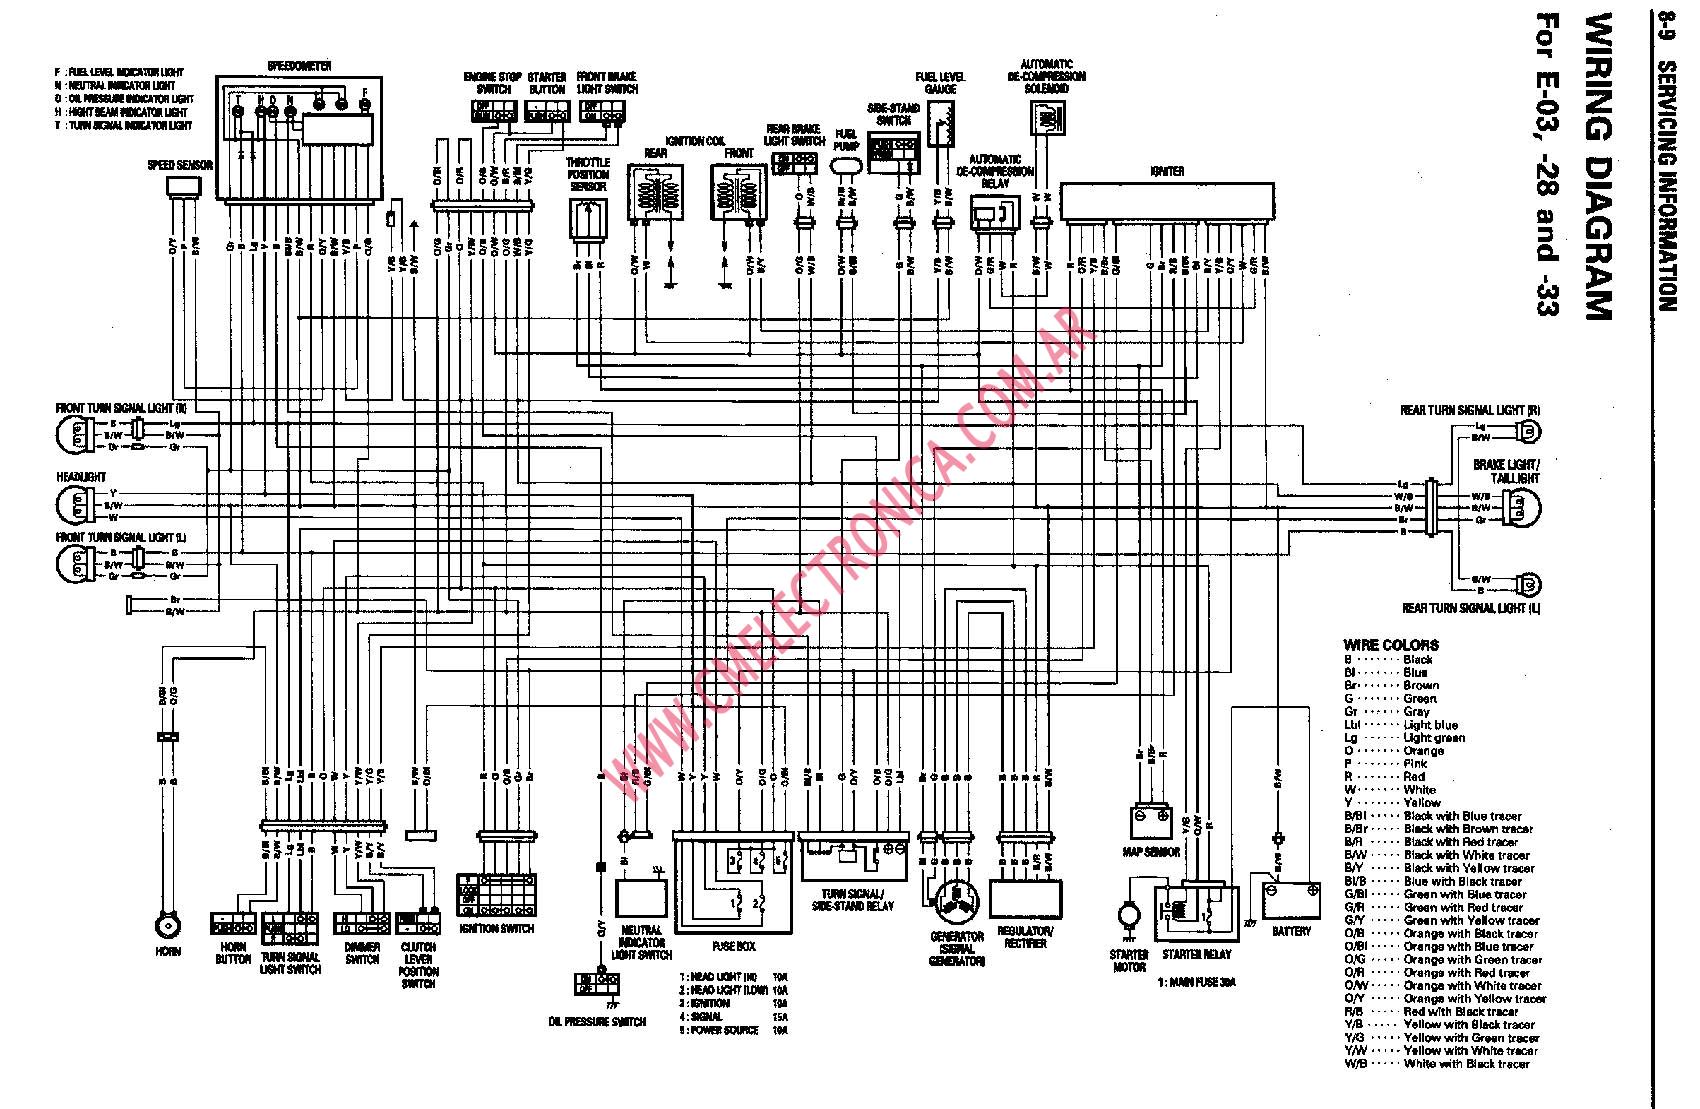 1995 Suzuki Intruder Vs800Gl Wiring Diagram from www.cmelectronica.com.ar